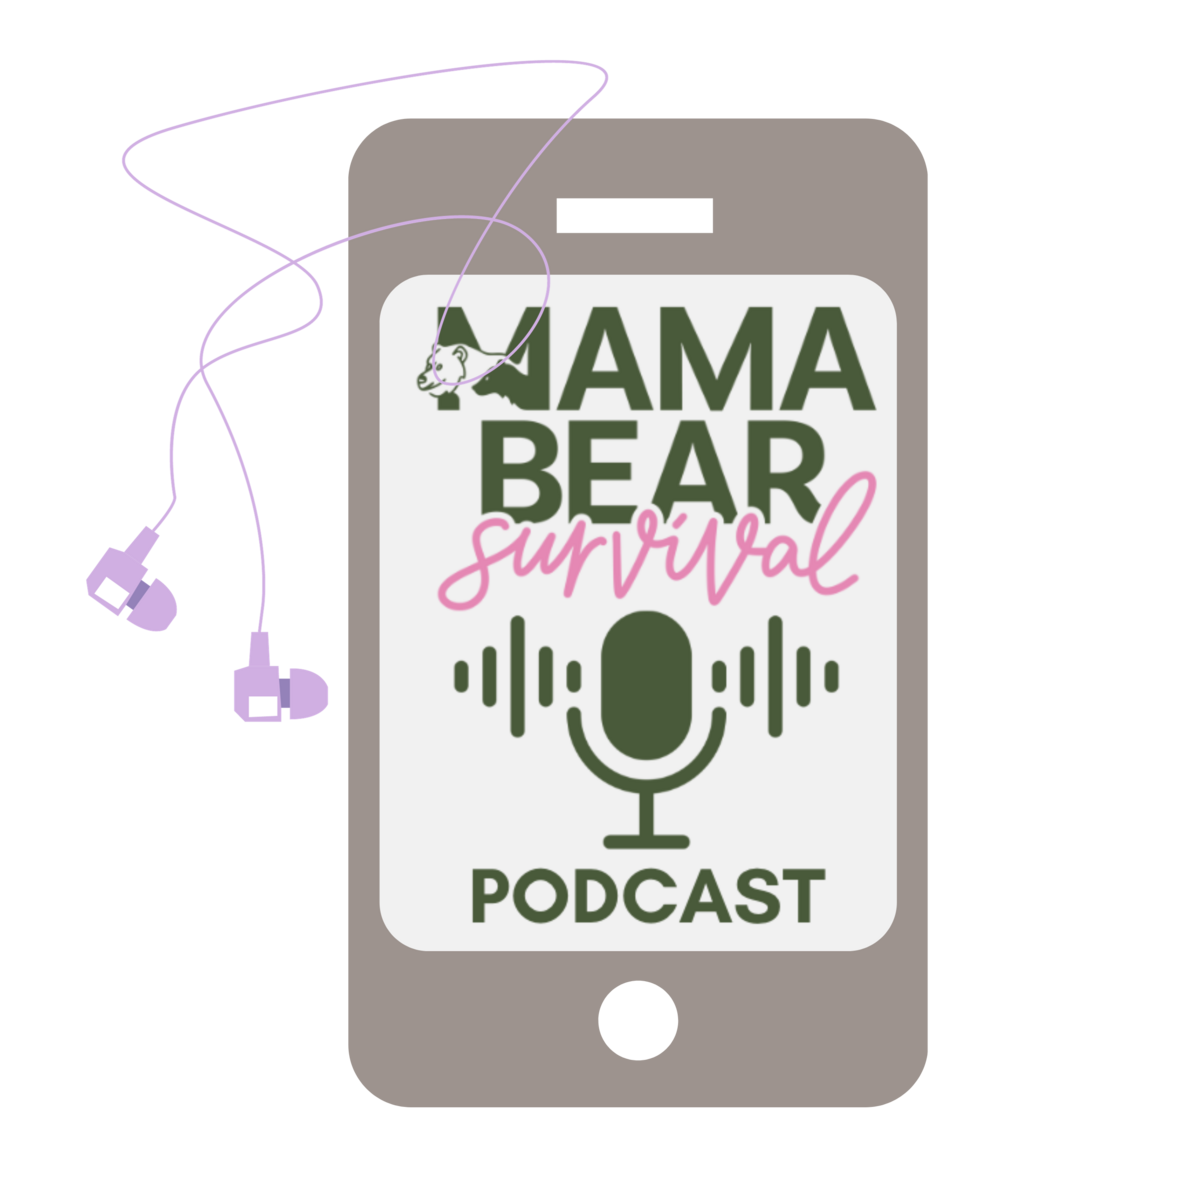 Podcast for moms